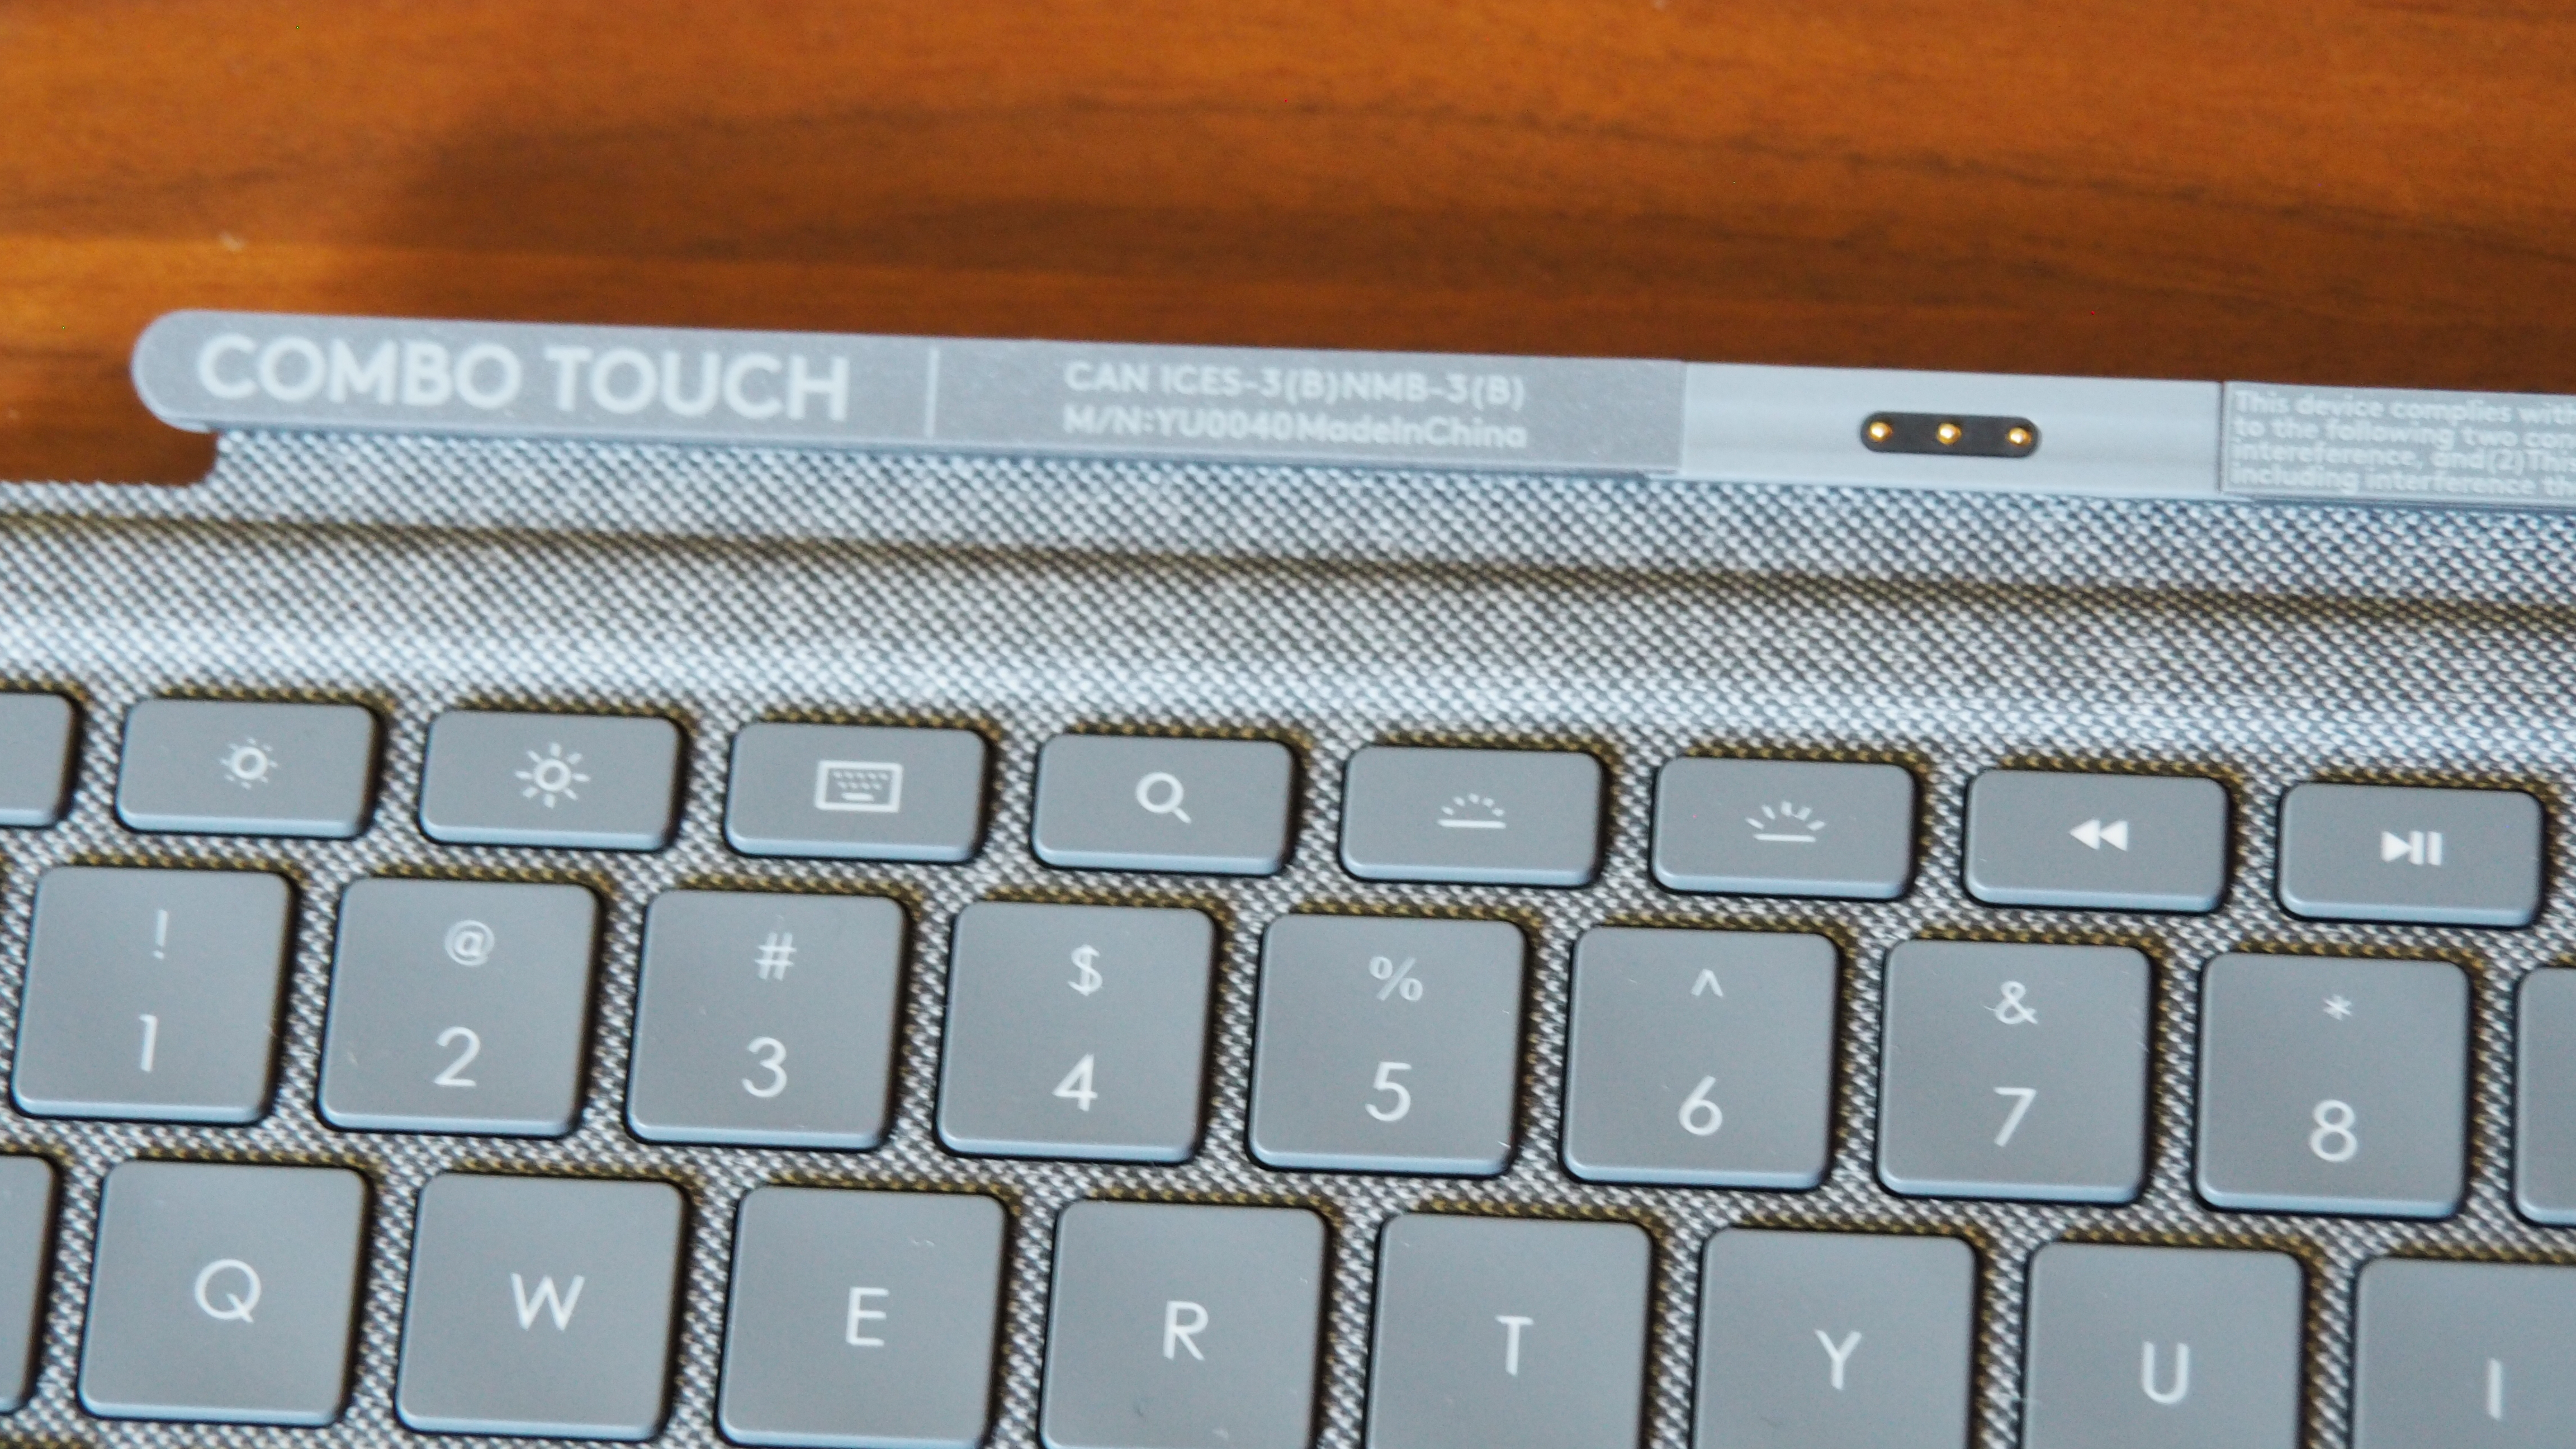 microsoft wireless keyboard 850 set up command key for mac